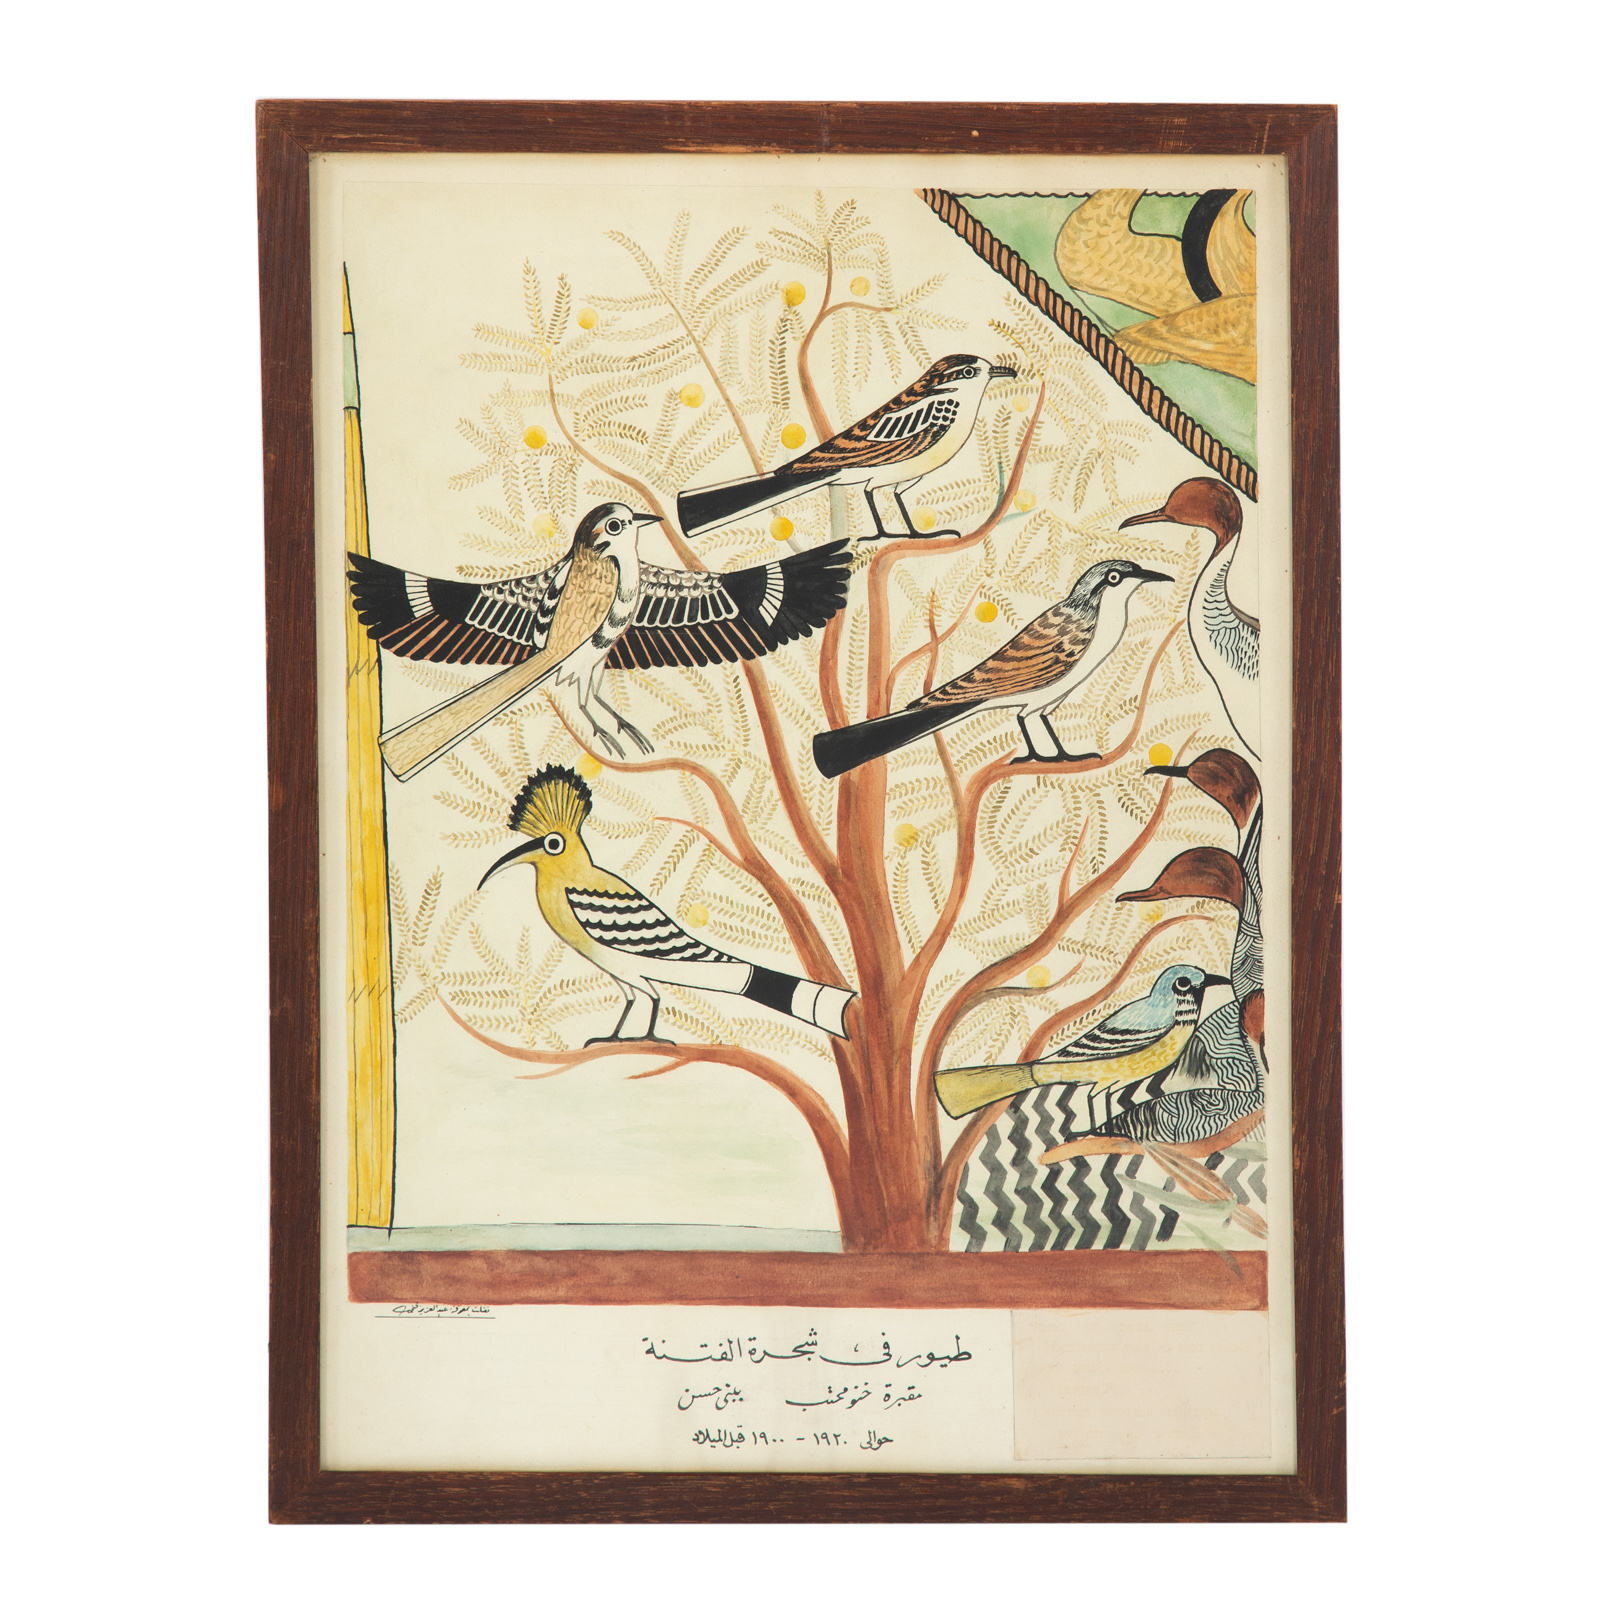 ARTIST UNKNOWN. "BIRDS IN THE TREE